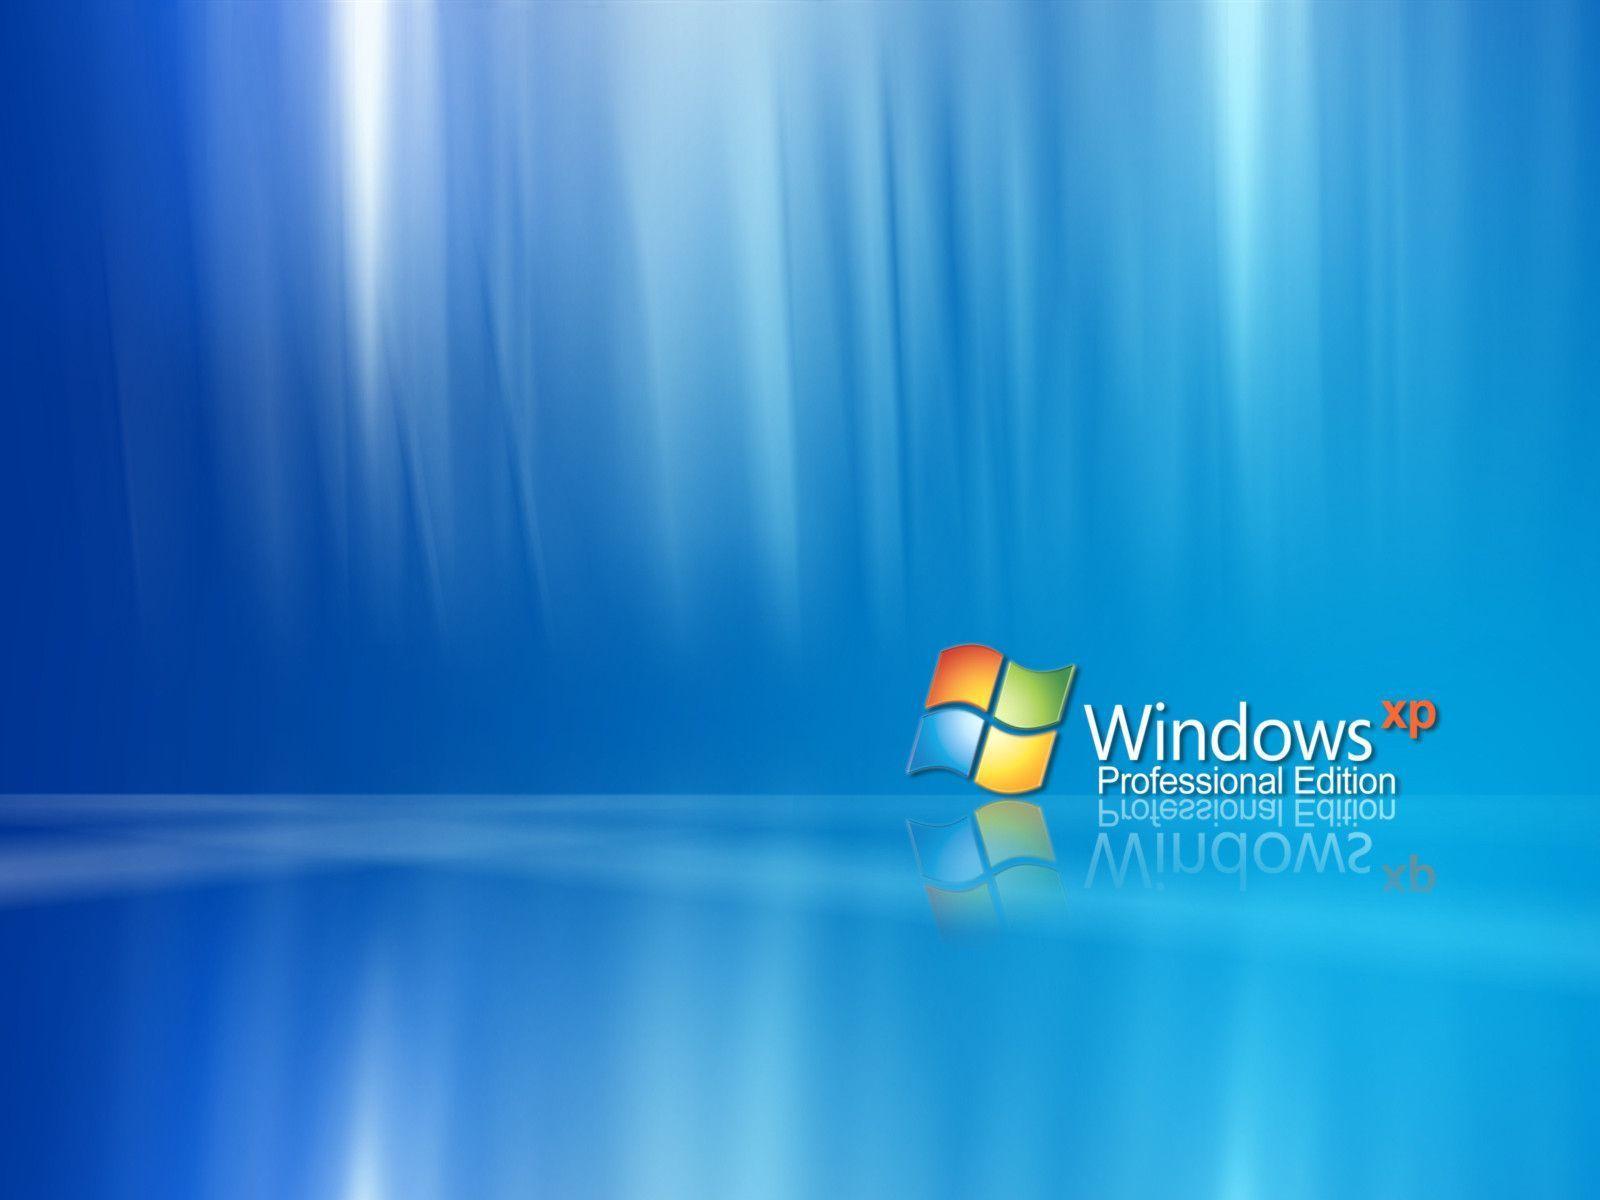 HD Wallpaper for Windows XP